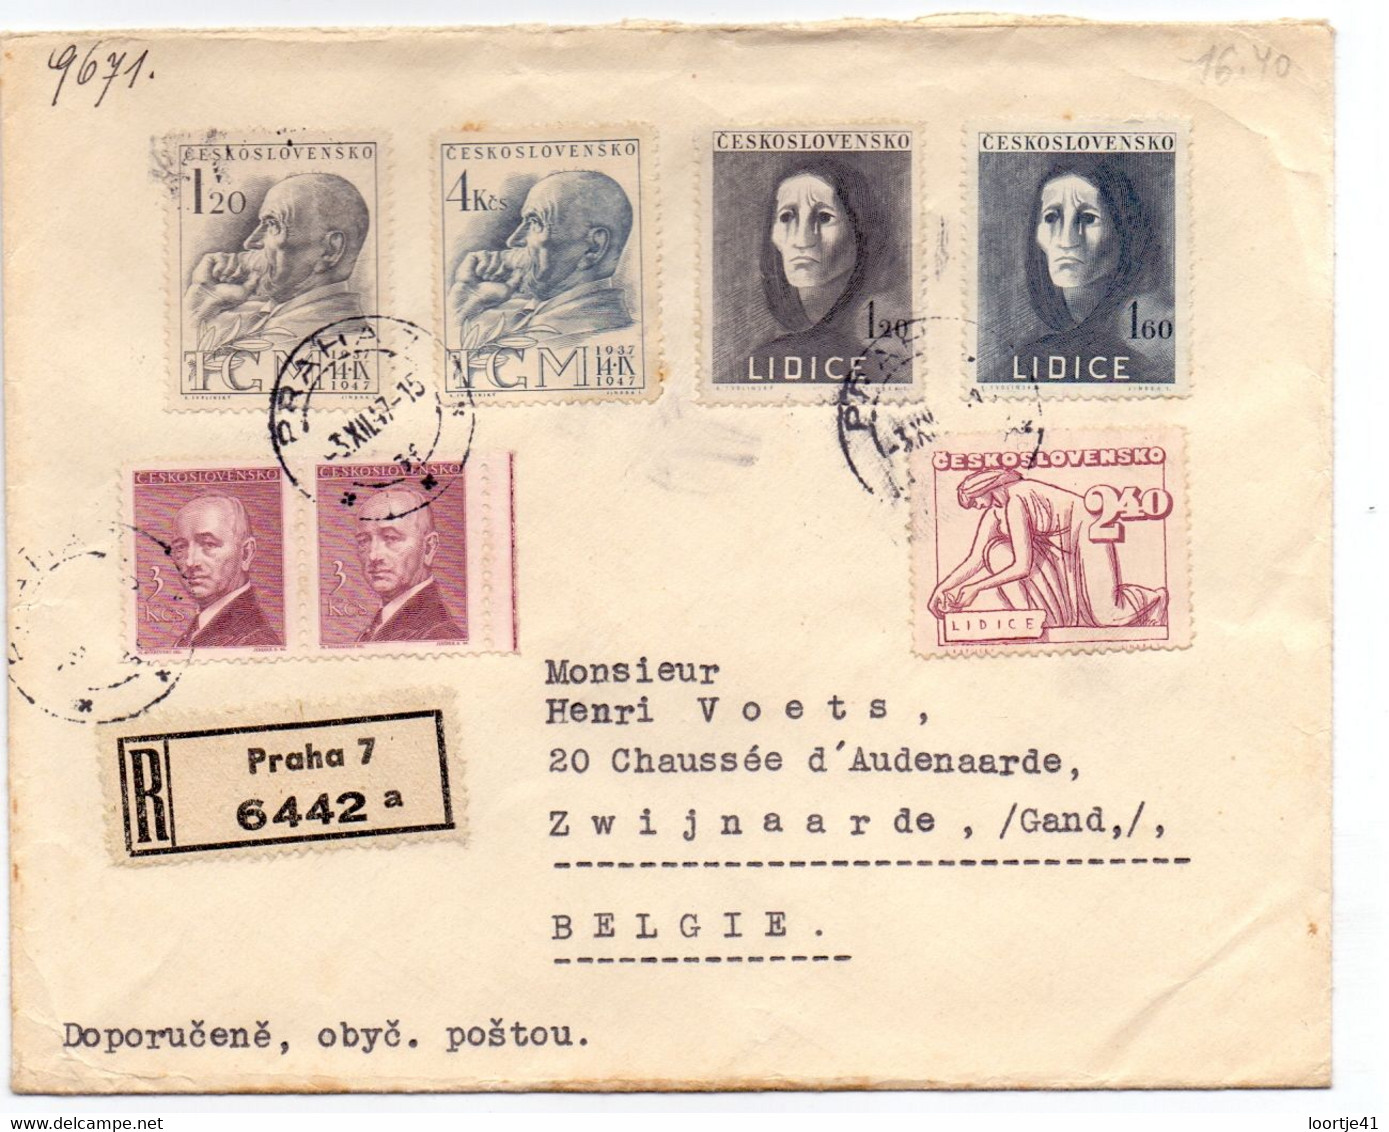 Omslag Enveloppe - Praha Ceskoslovensko Naar Gand Gent - Recommandé Stempel Cachet 1947 - Covers